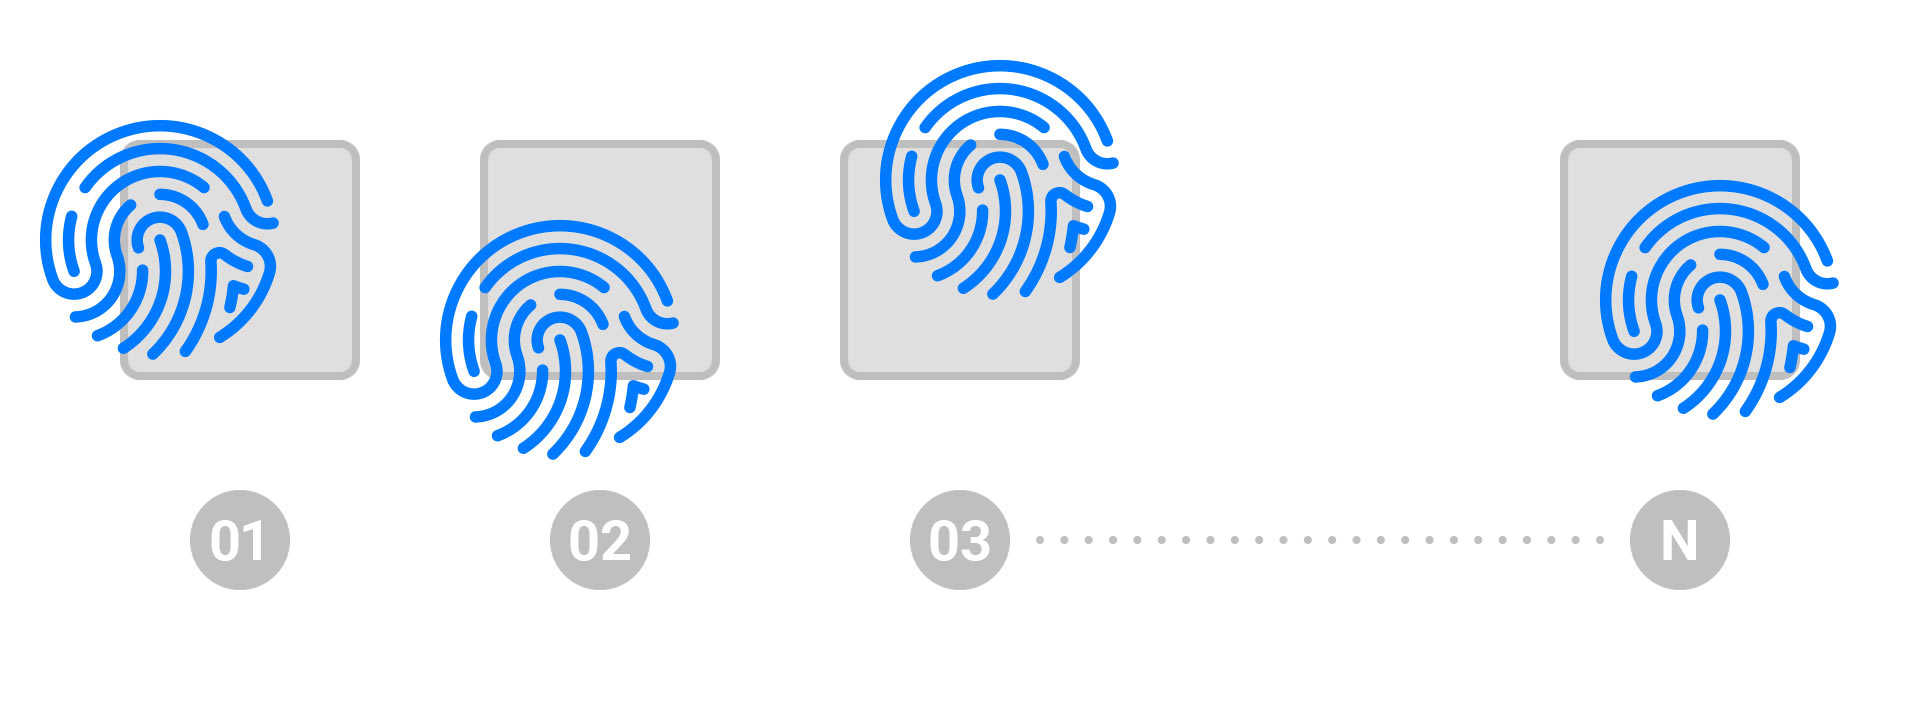 hiring process fingerprint capture